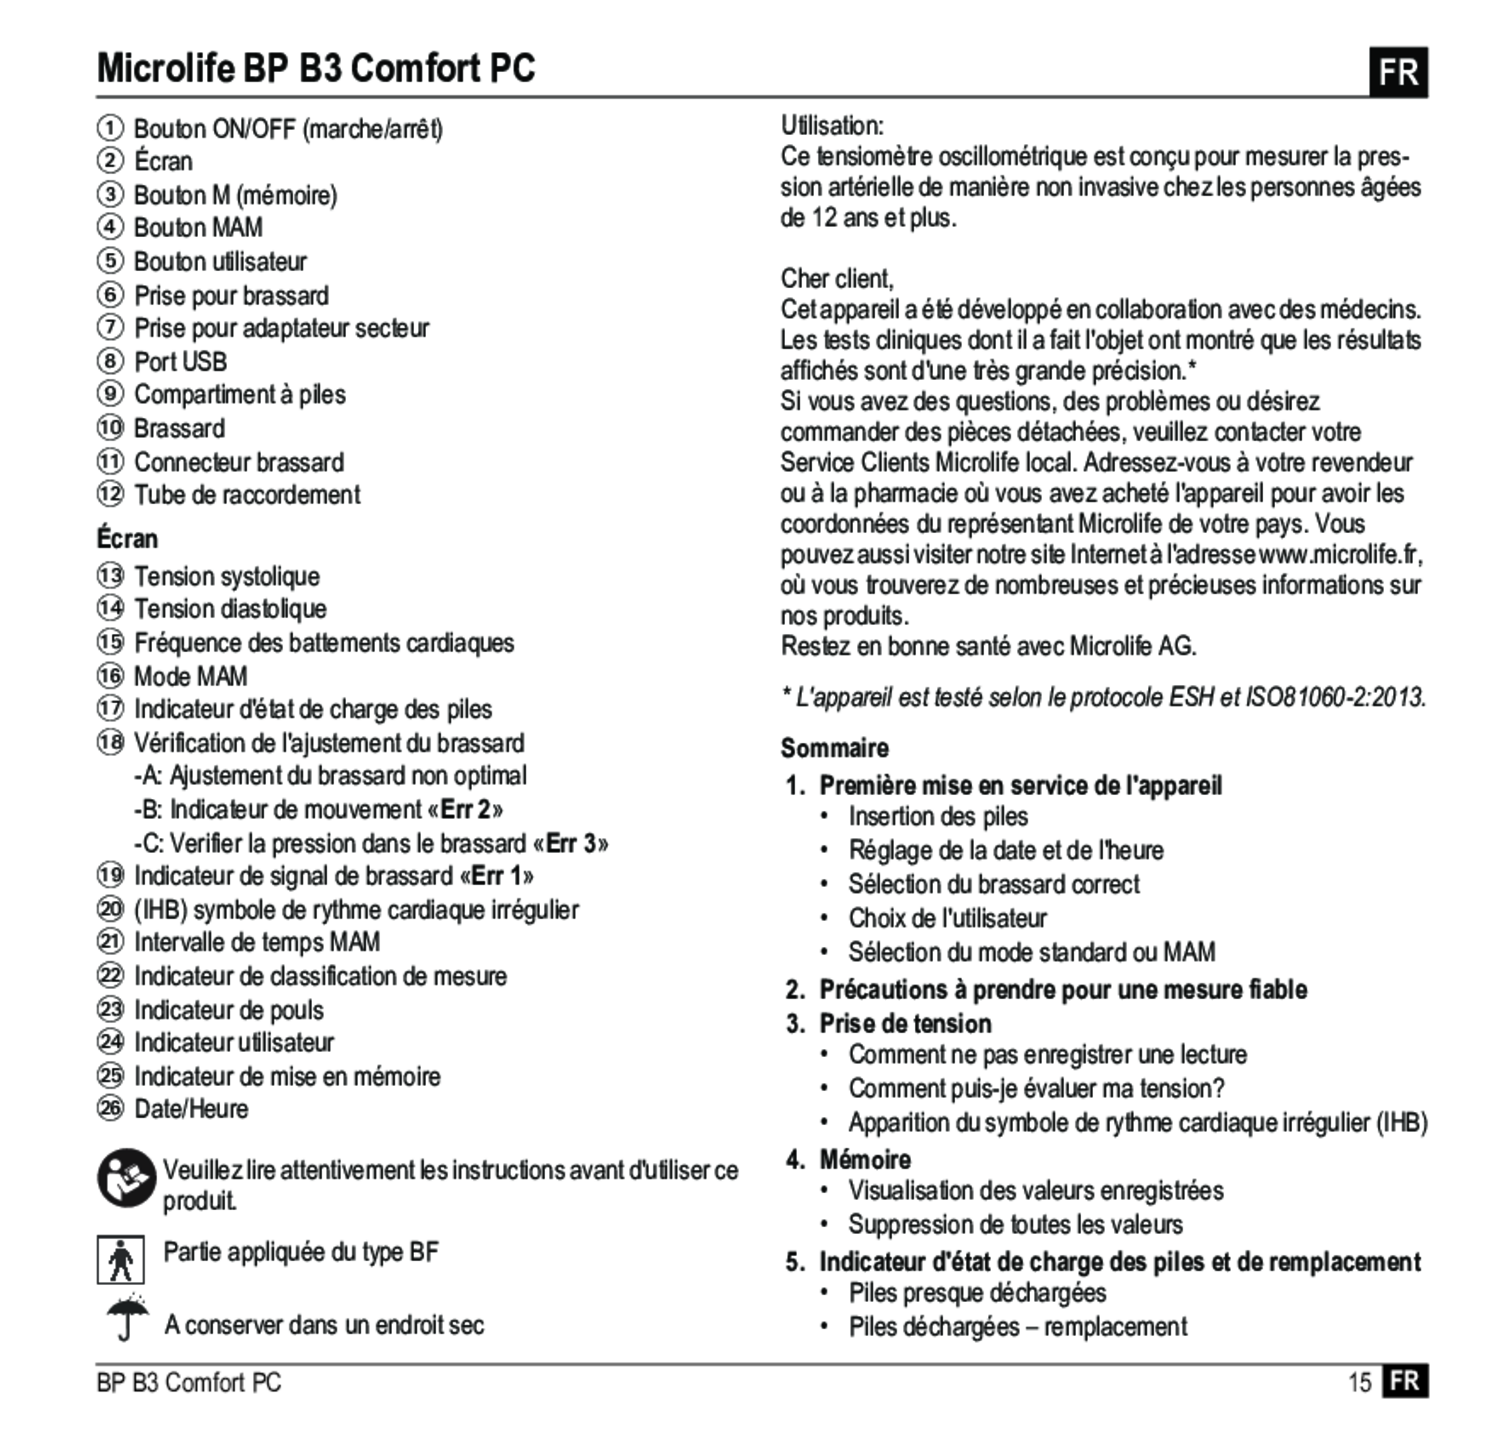 Microlife BP Bloeddrukmeter B3 Comfort PC afbeelding van document #17, gebruiksaanwijzing